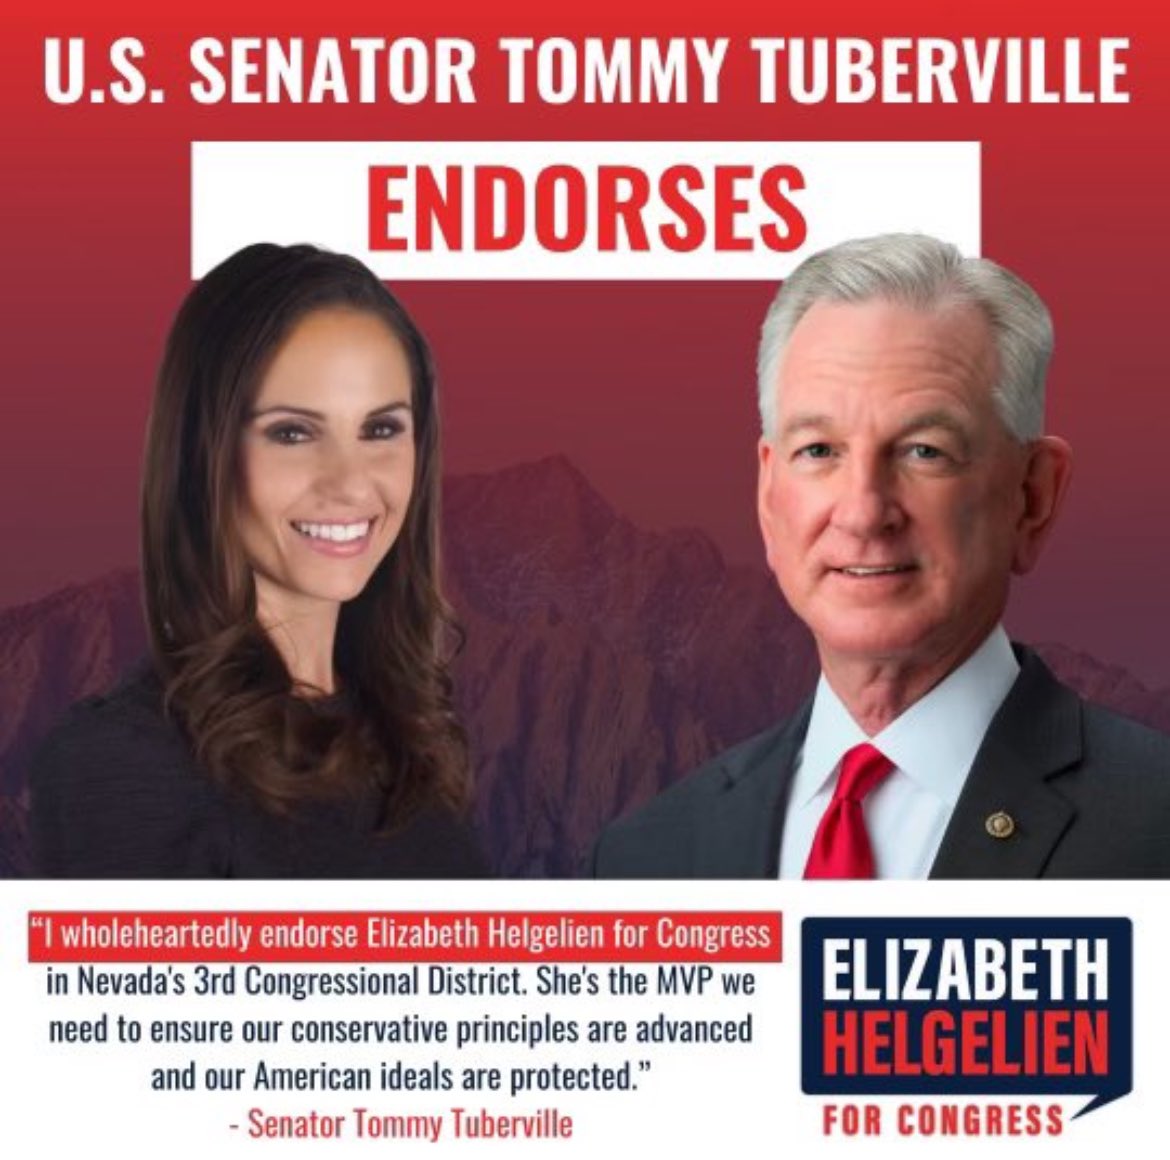 I’m honored to be endorsed by U.S. Senator Tommy Tuberville! Thank you for your leadership Senator! Vote Elizabeth Helgelien for Congress on June 11! Early voting starts May 25th • Nevada ElizabethForNevada.com @TTuberville @realDonaldTrump #nv03 #Tuberville #Nevada